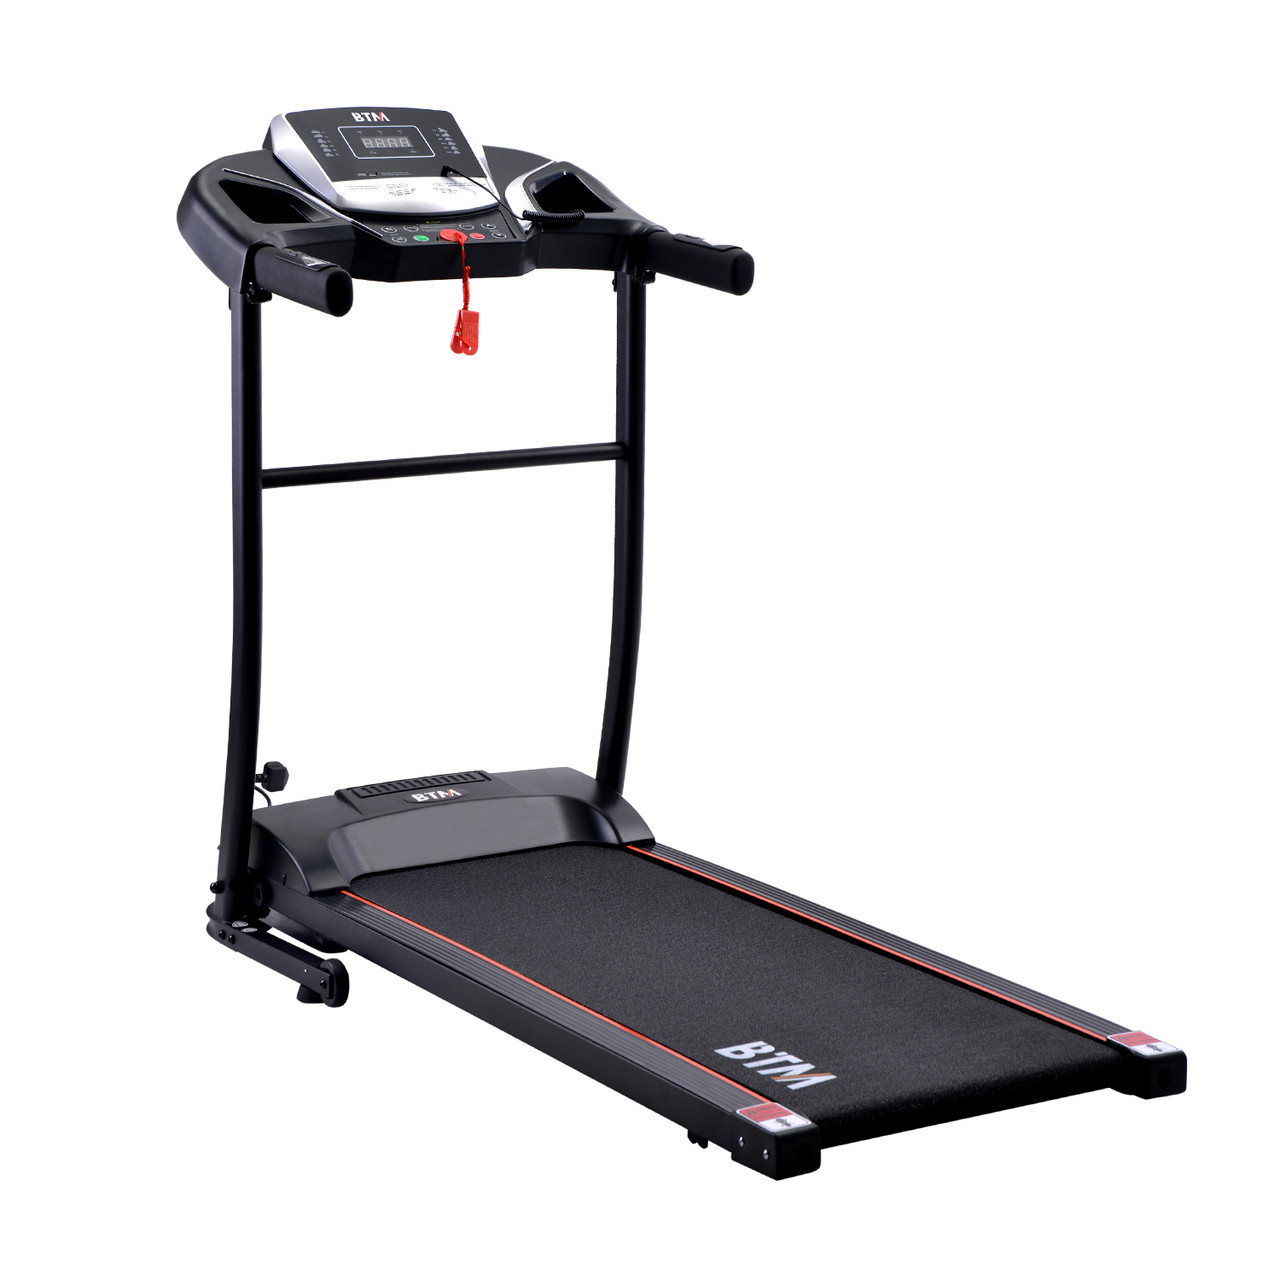 Treadmill Electric Motorized Folding Running Jogging Machine Gym Home  Fitness UK